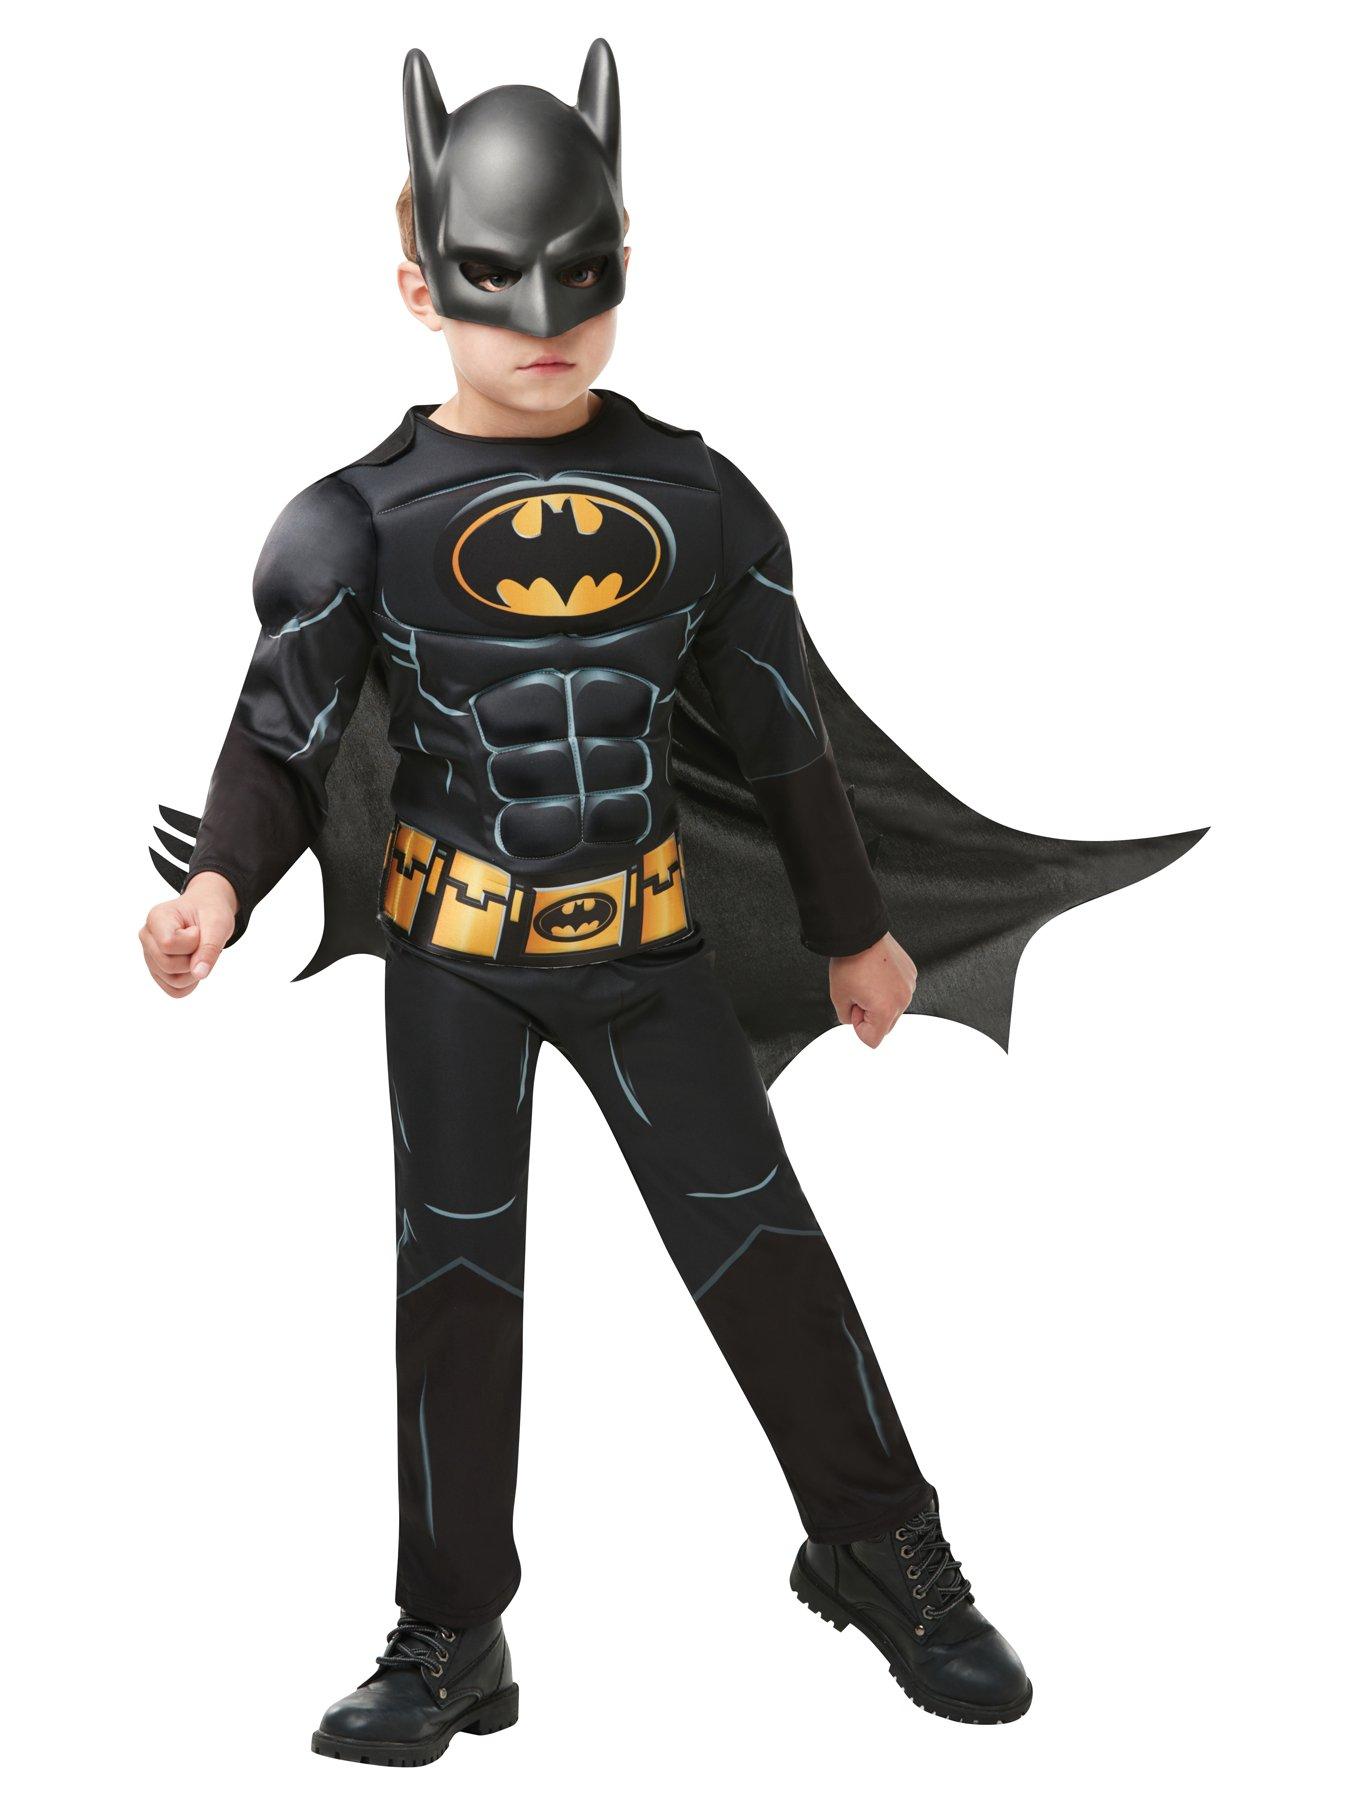 Batman Costume | Batman Costume for Kids 